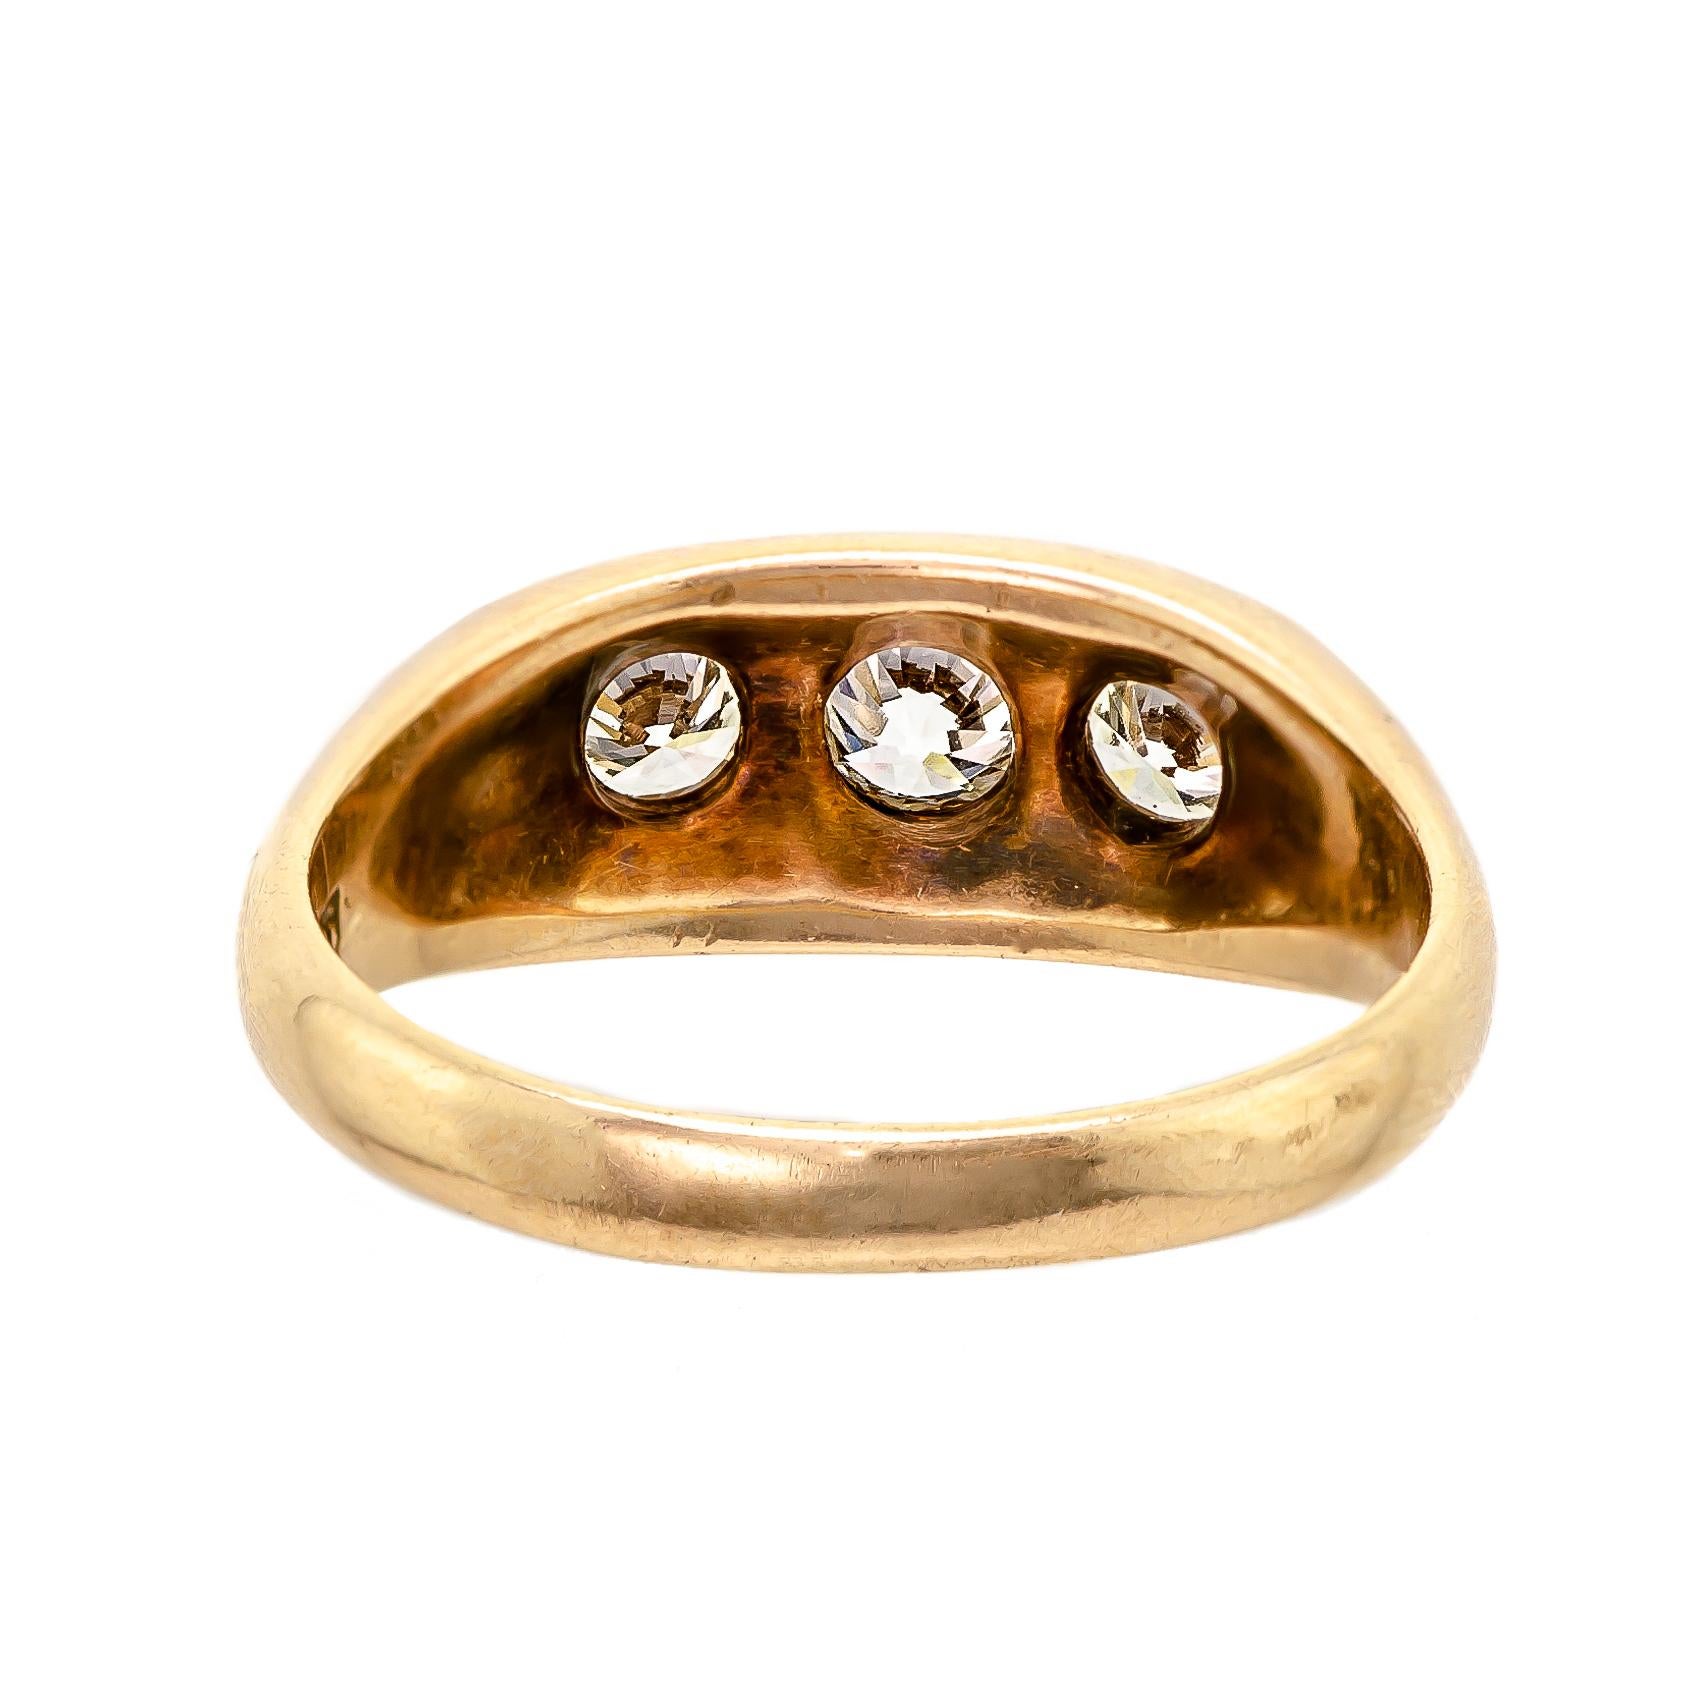 14 karat gold ring with diamonds